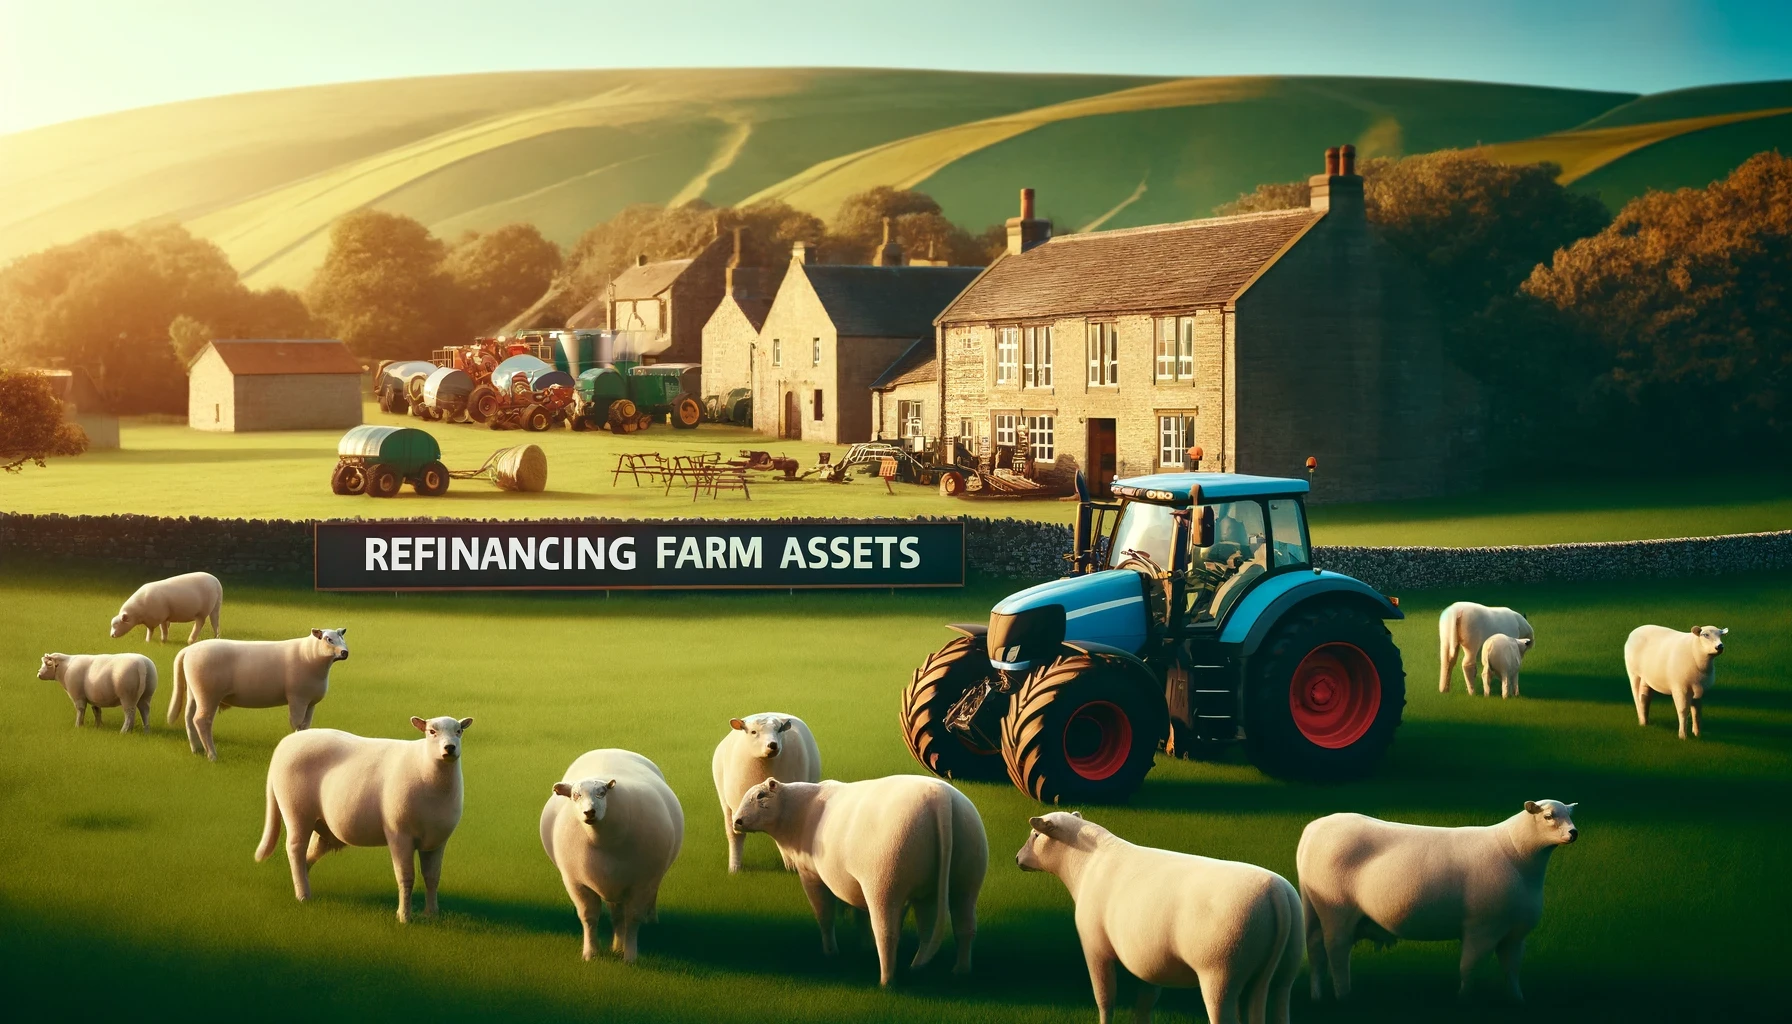 Refinancing Farm Assets A Strategic Move for UK Farmers